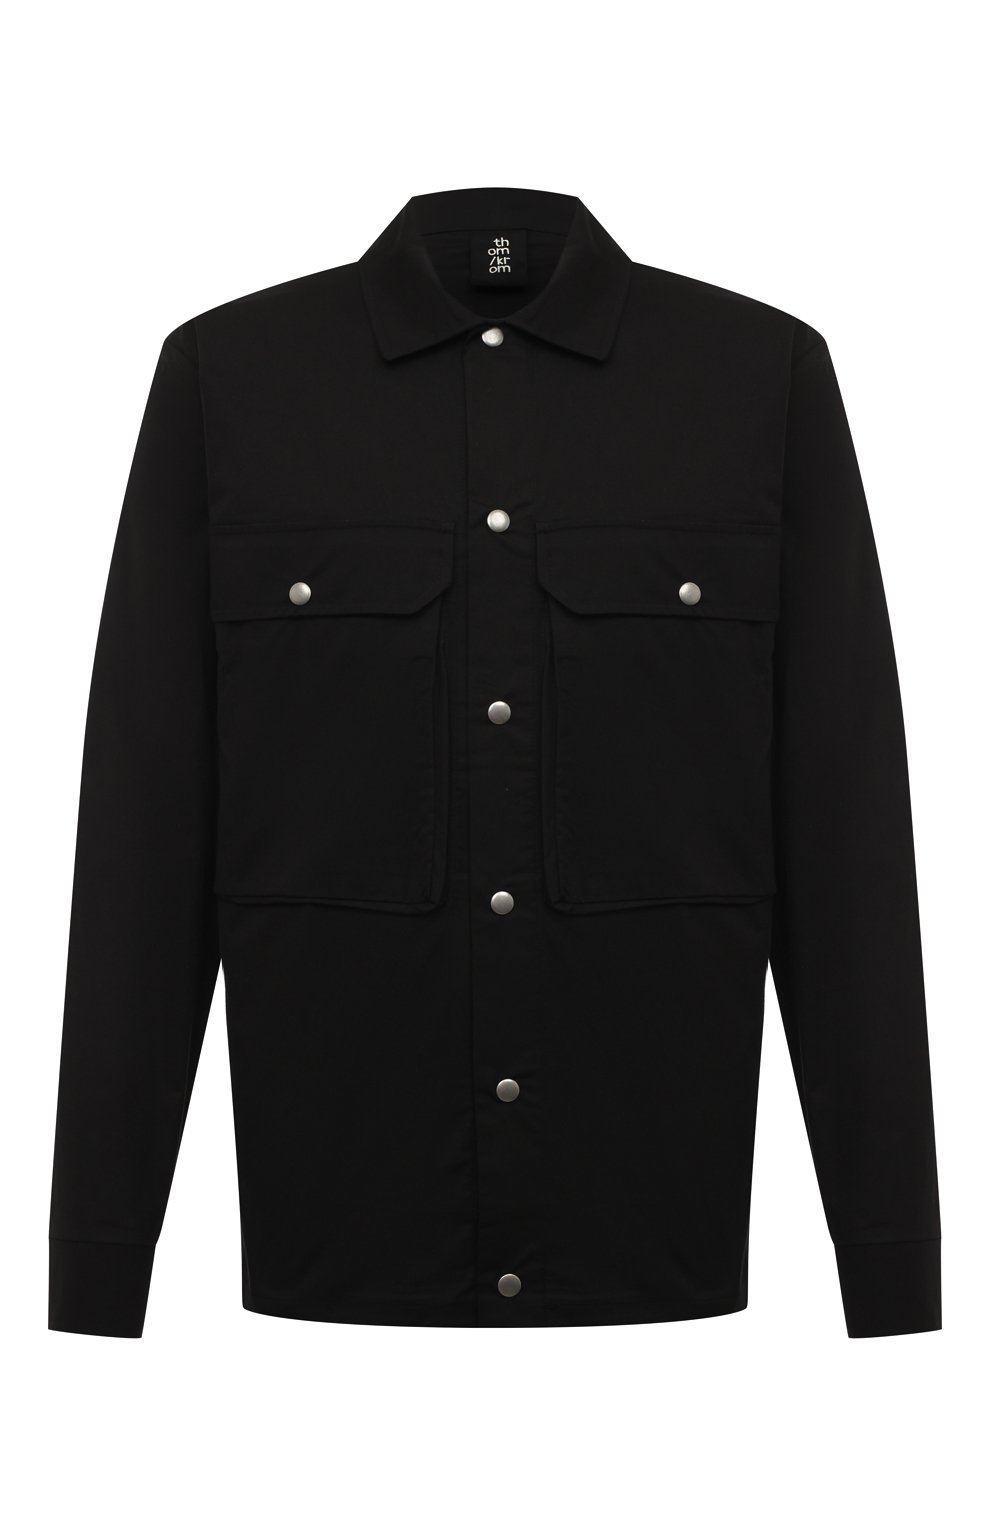 Куртки Thom Krom, Хлопковая куртка-рубашка Thom Krom, Турция, Чёрный, Хлопок: 97%; Эластан (Полиуретан): 3%;, 13321373  - купить